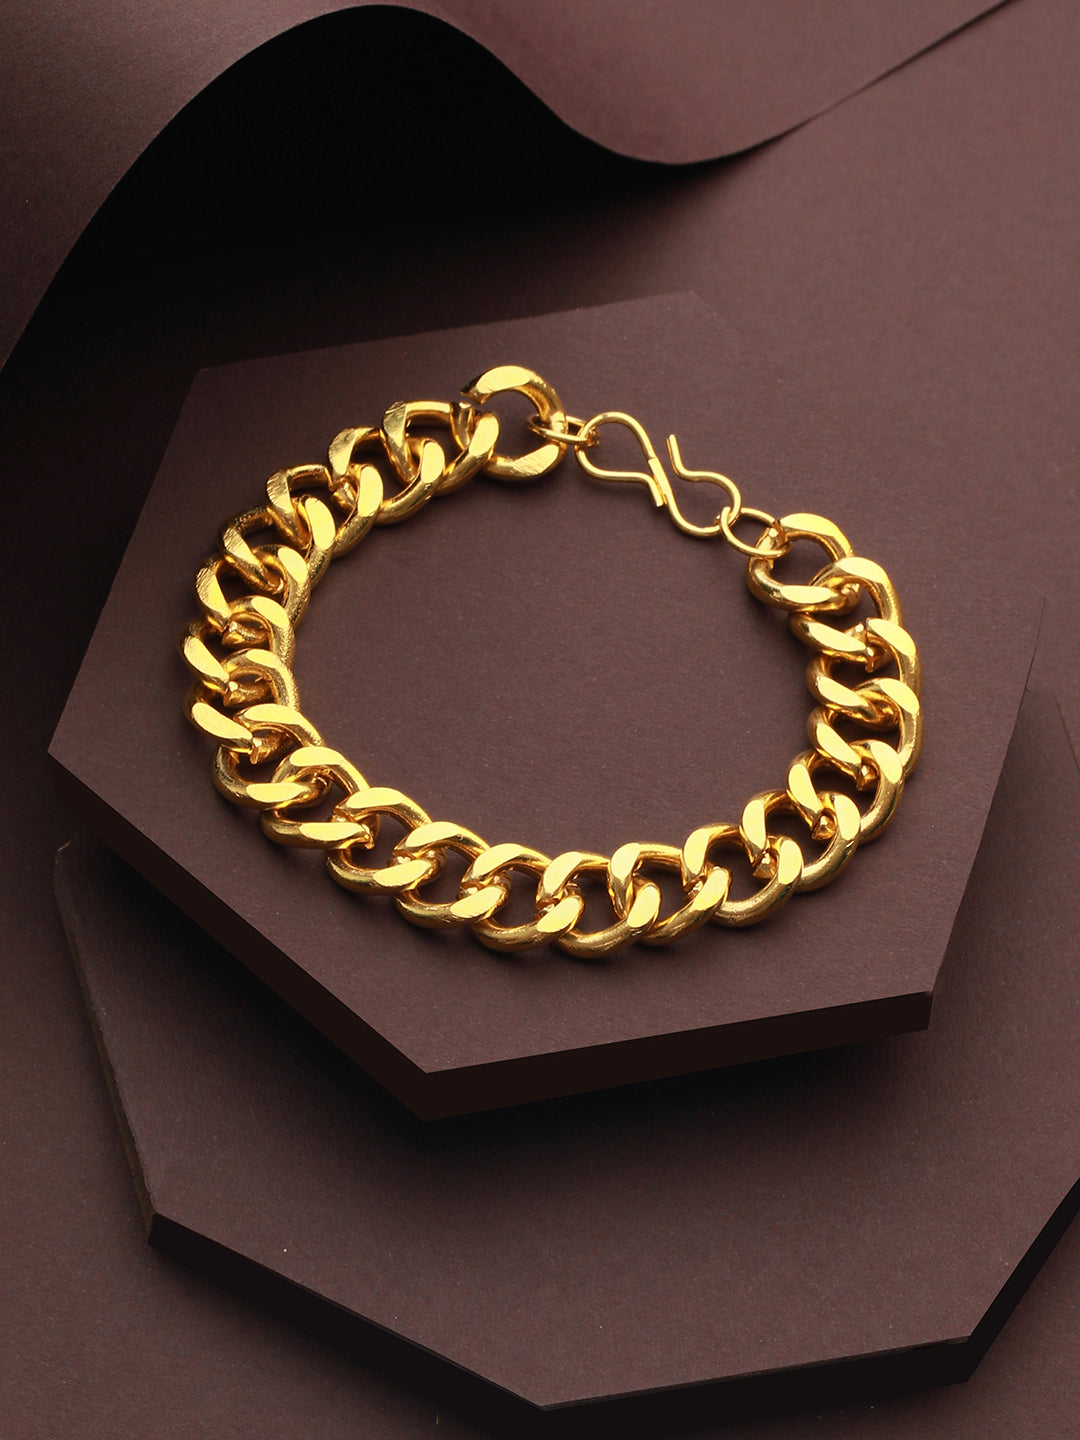 Permanent Forever Bracelets - Alexandra Marks Jewelry Chicago - Go Viral